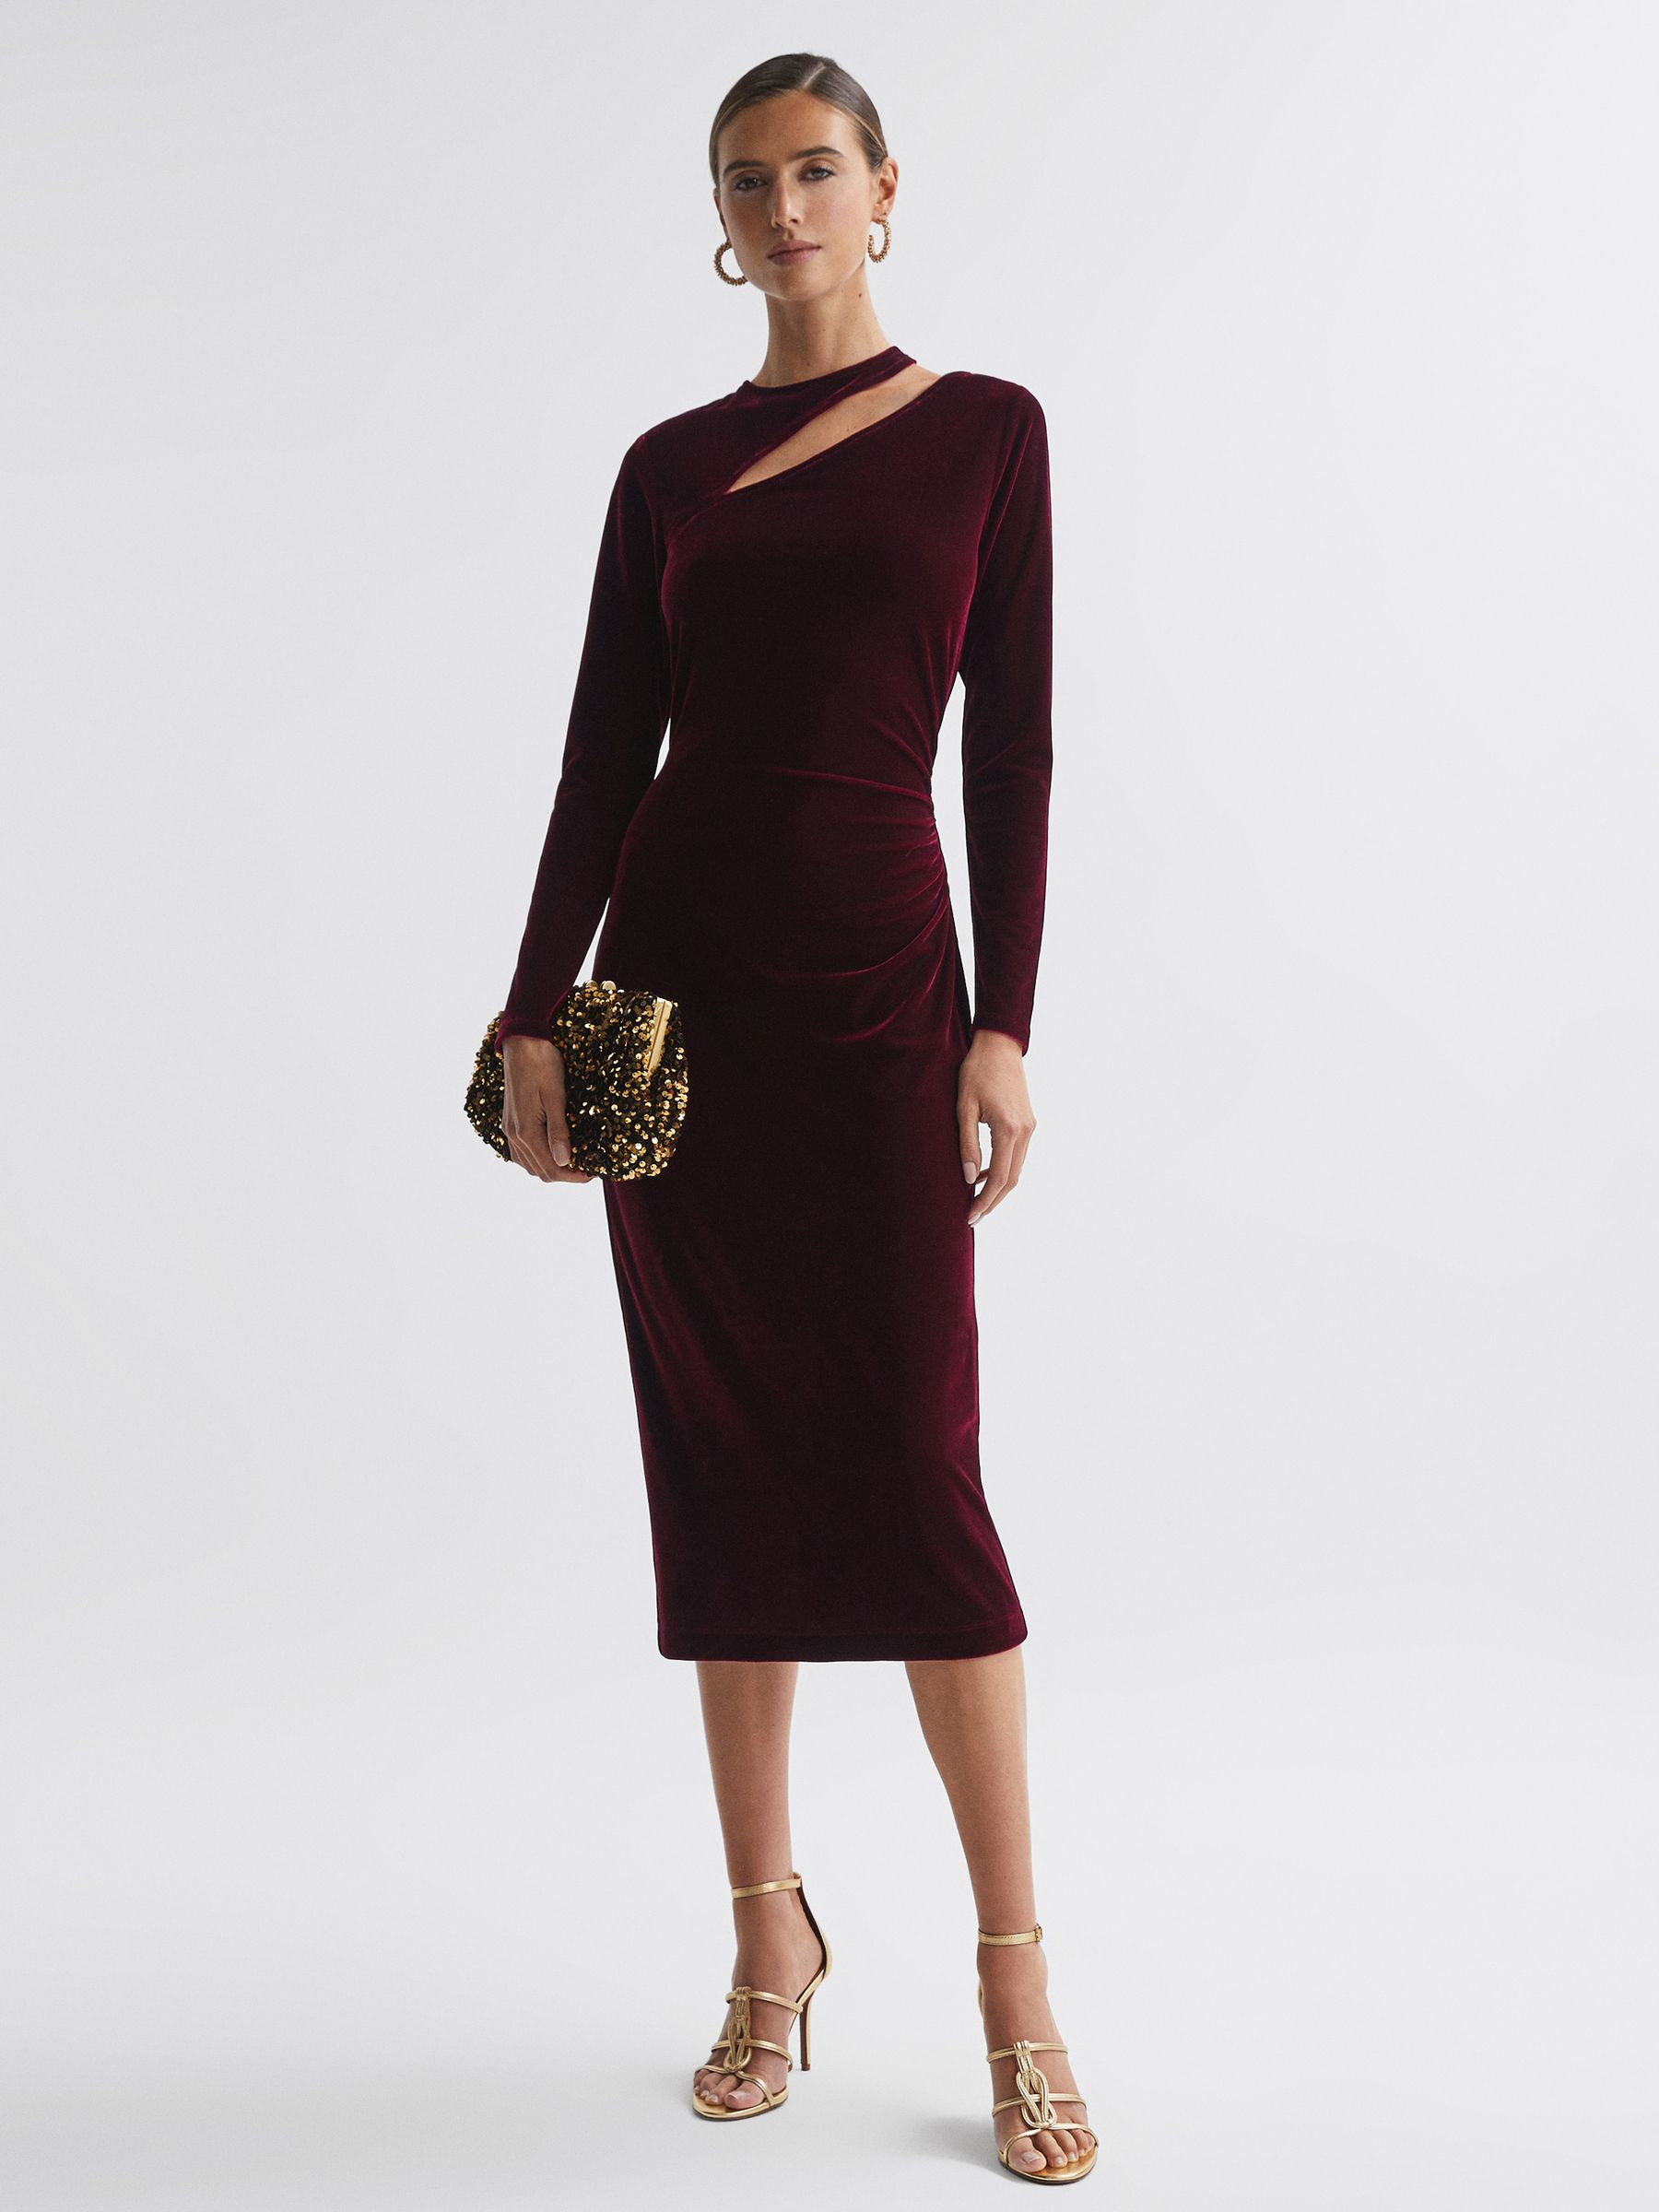 Reiss Macey Velvet Cut-Out Midi Dress | REISS USA